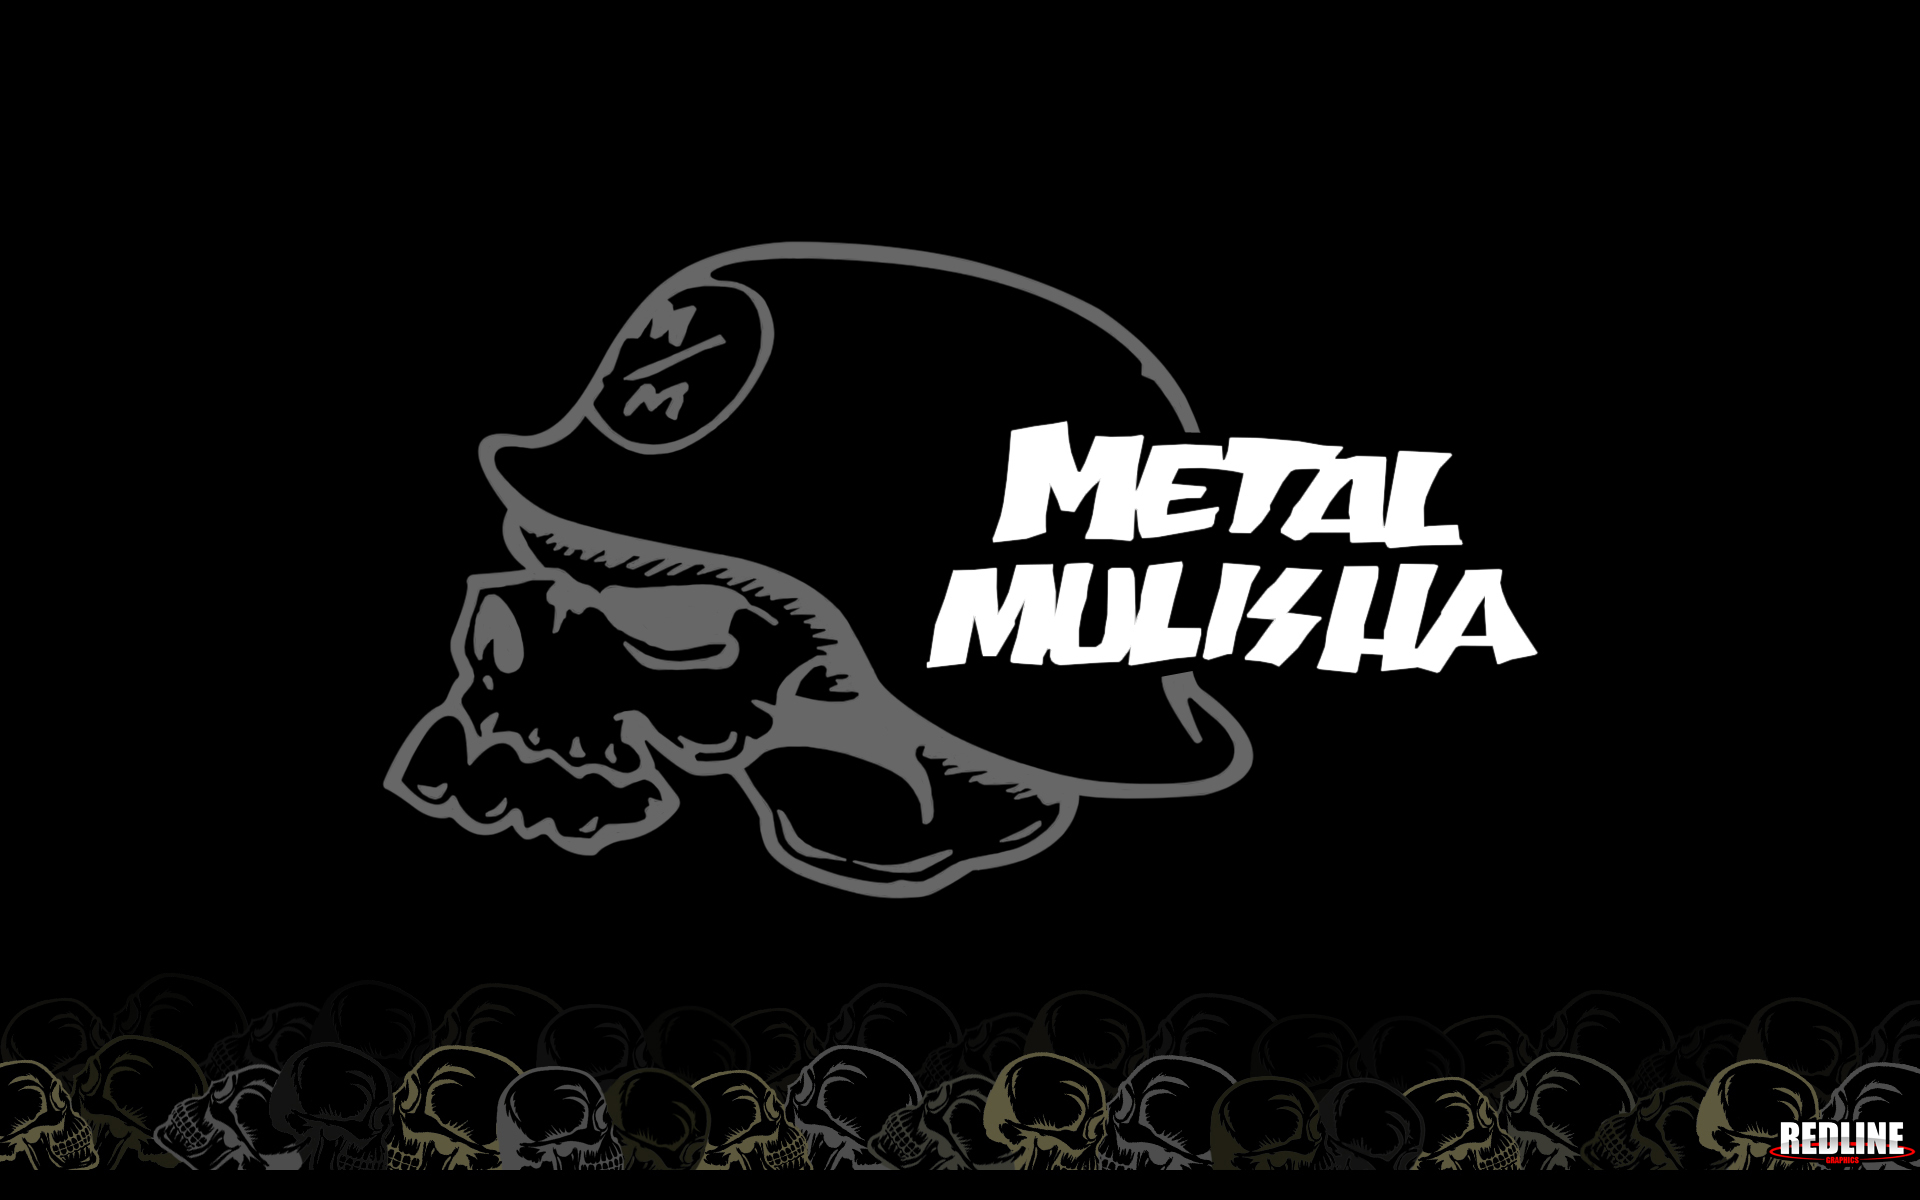 Metal Mulisha Redline Gfx By Crf450ryda